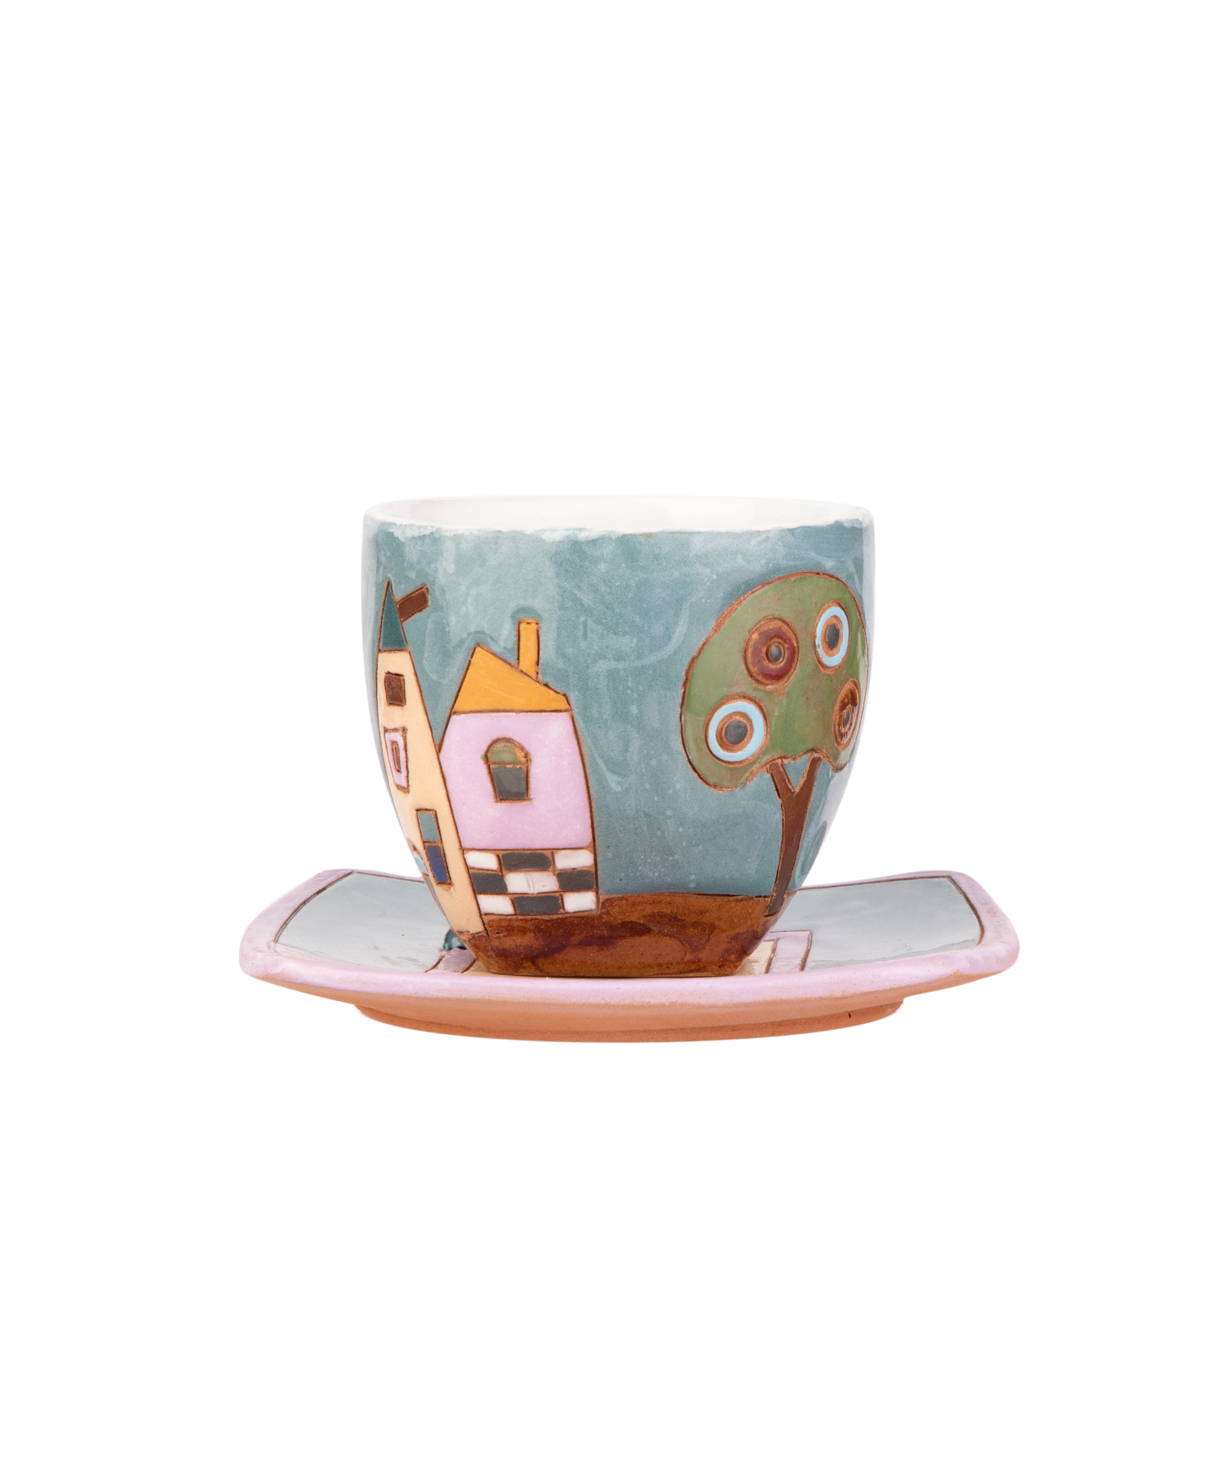 Coffe mug `Nuard Ceramics` City. day-night №2